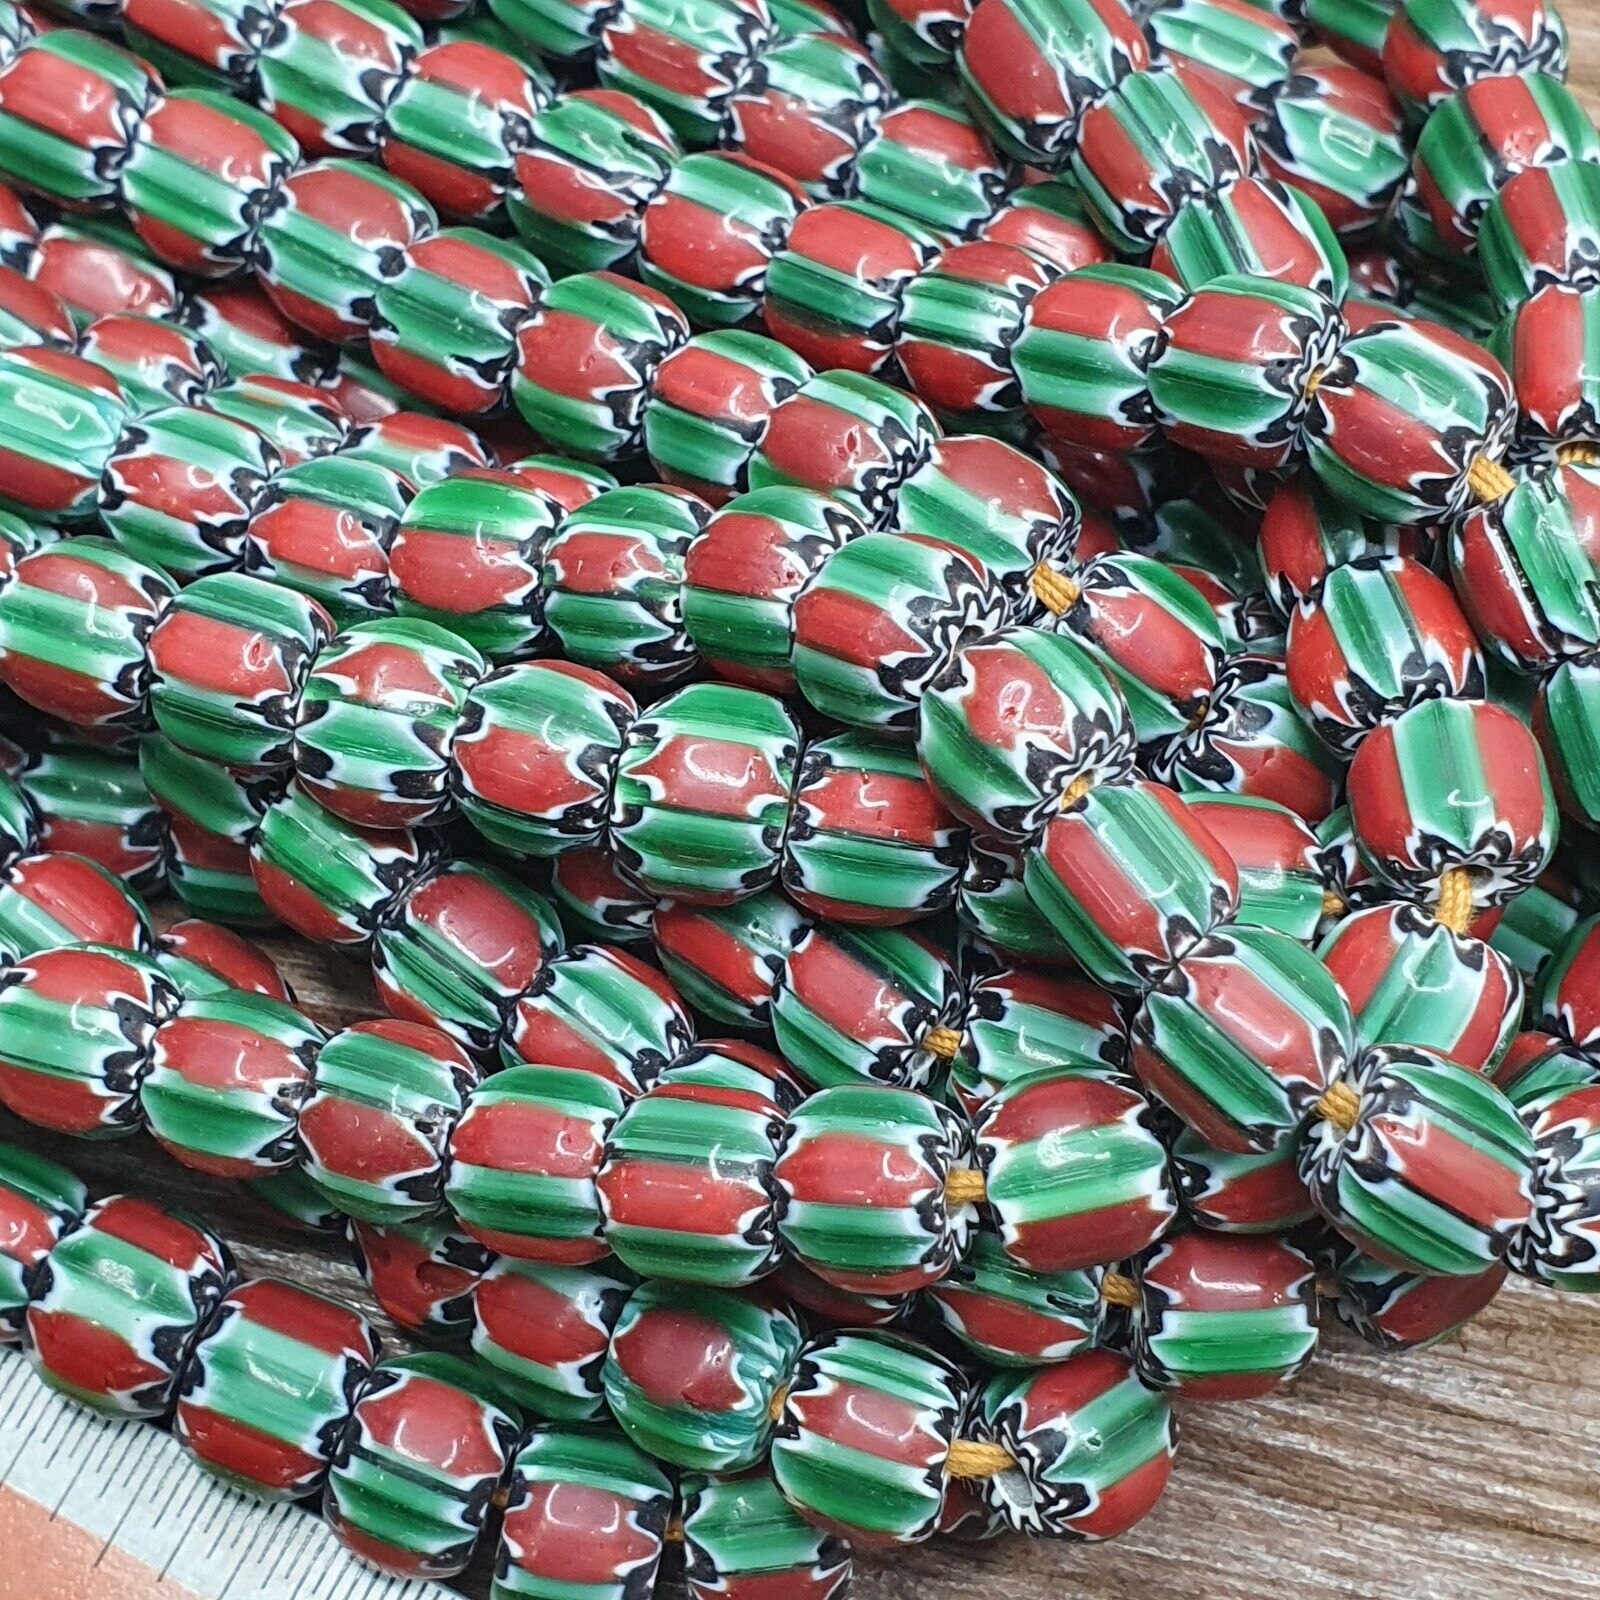 Stunning watermelon Chevrons Venetian Style Beads Strand 9MM